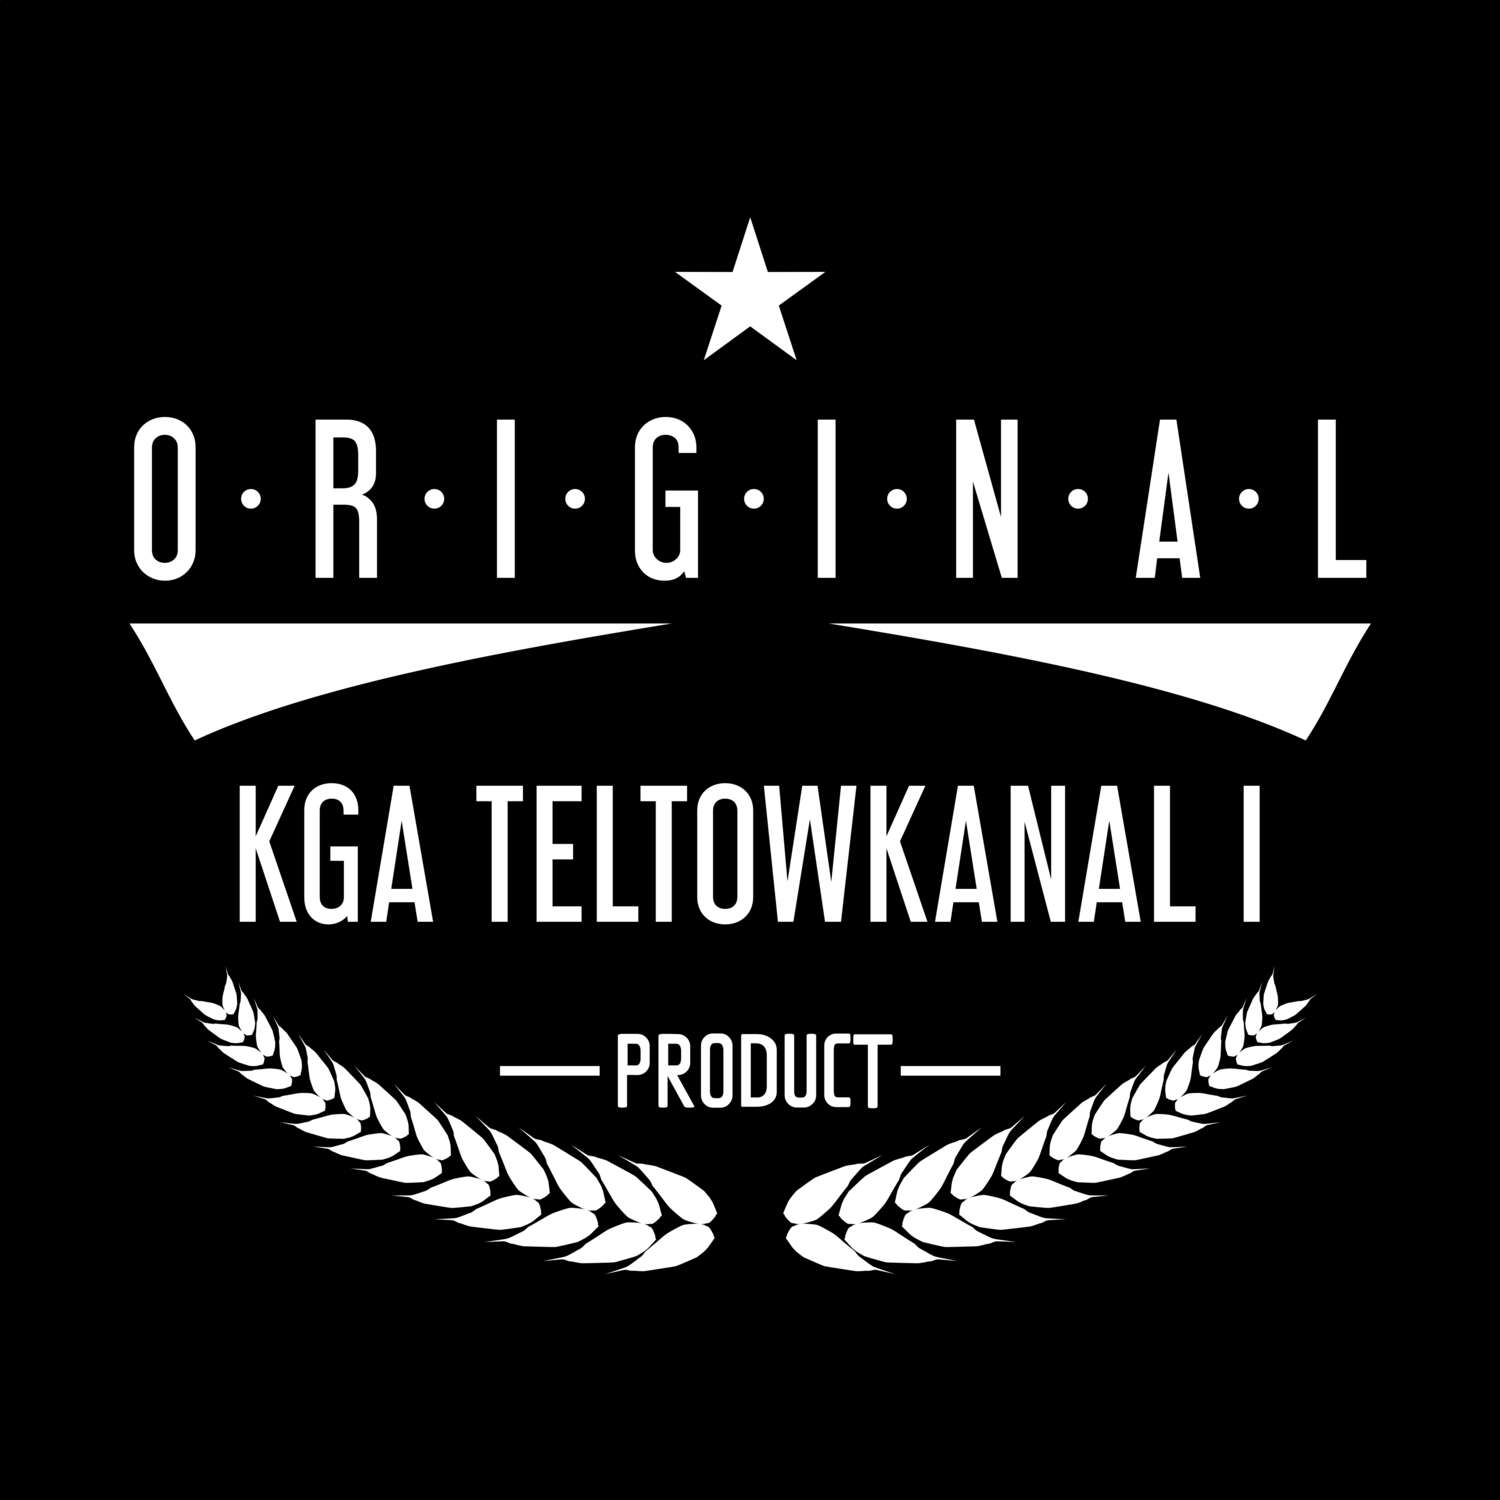 KGA Teltowkanal I T-Shirt »Original Product«